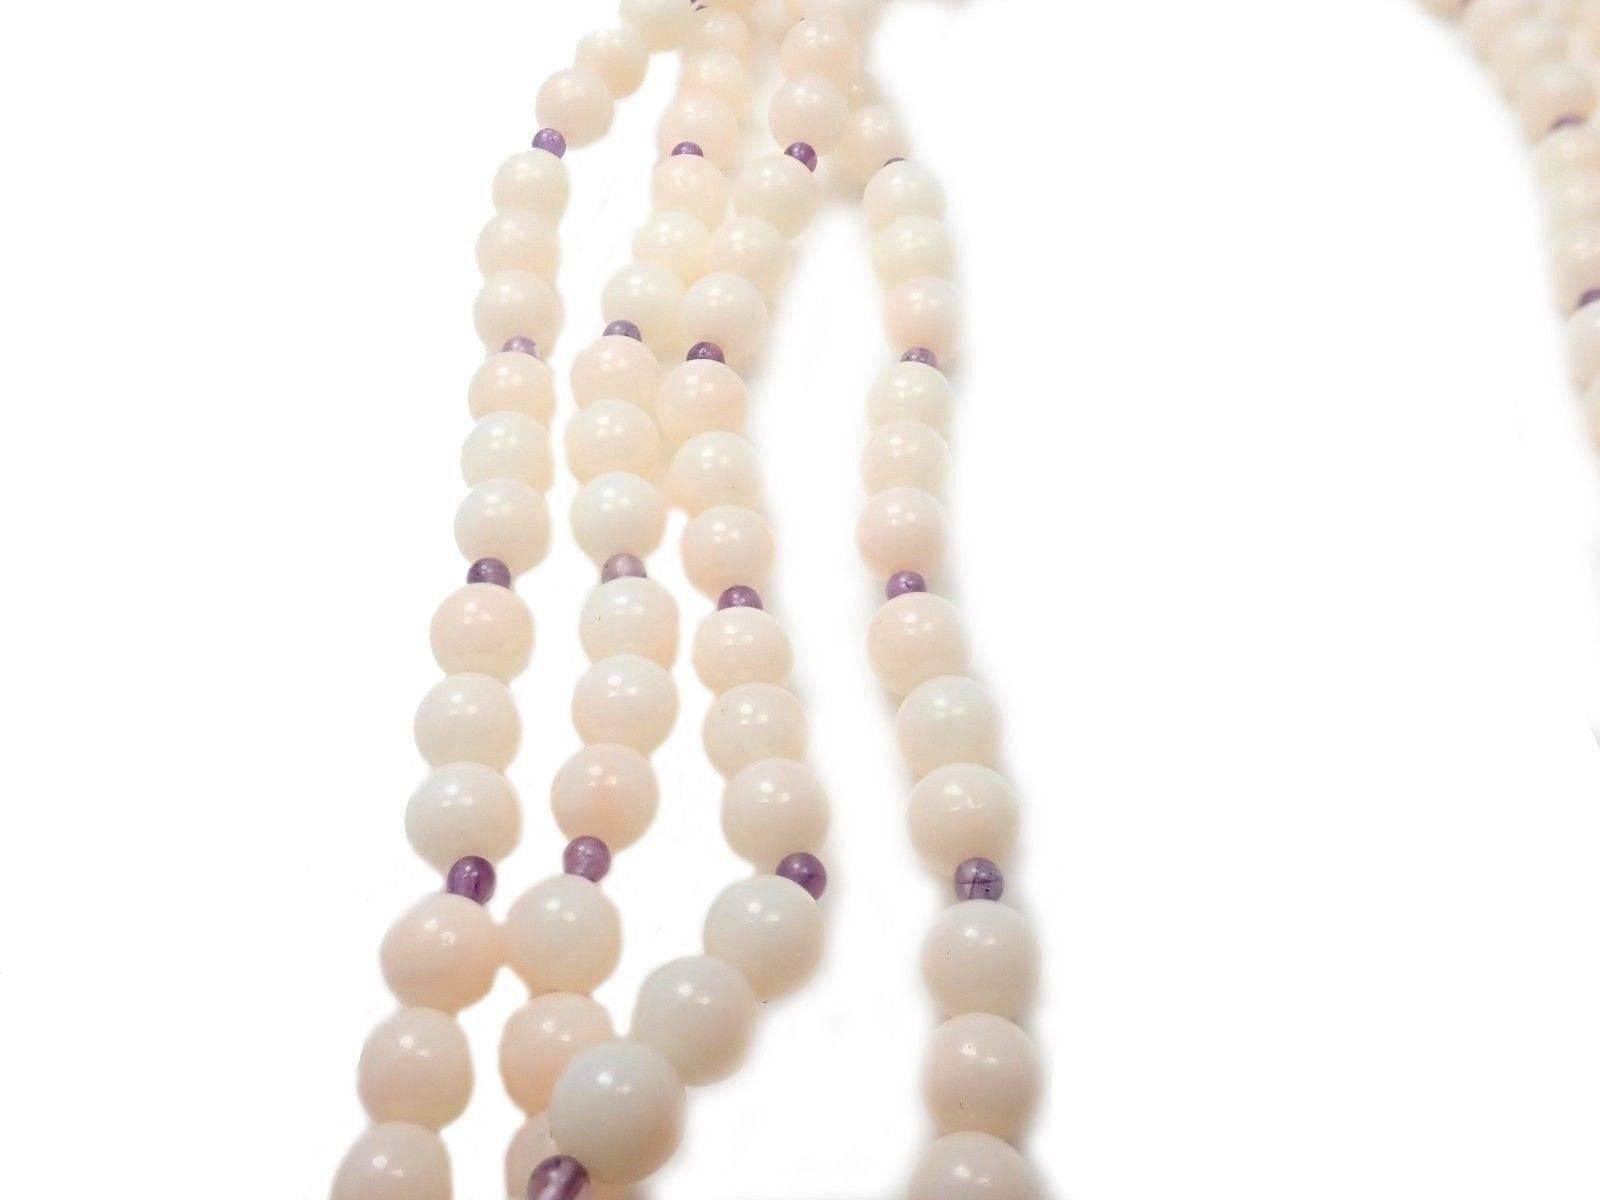 angel skin coral beads